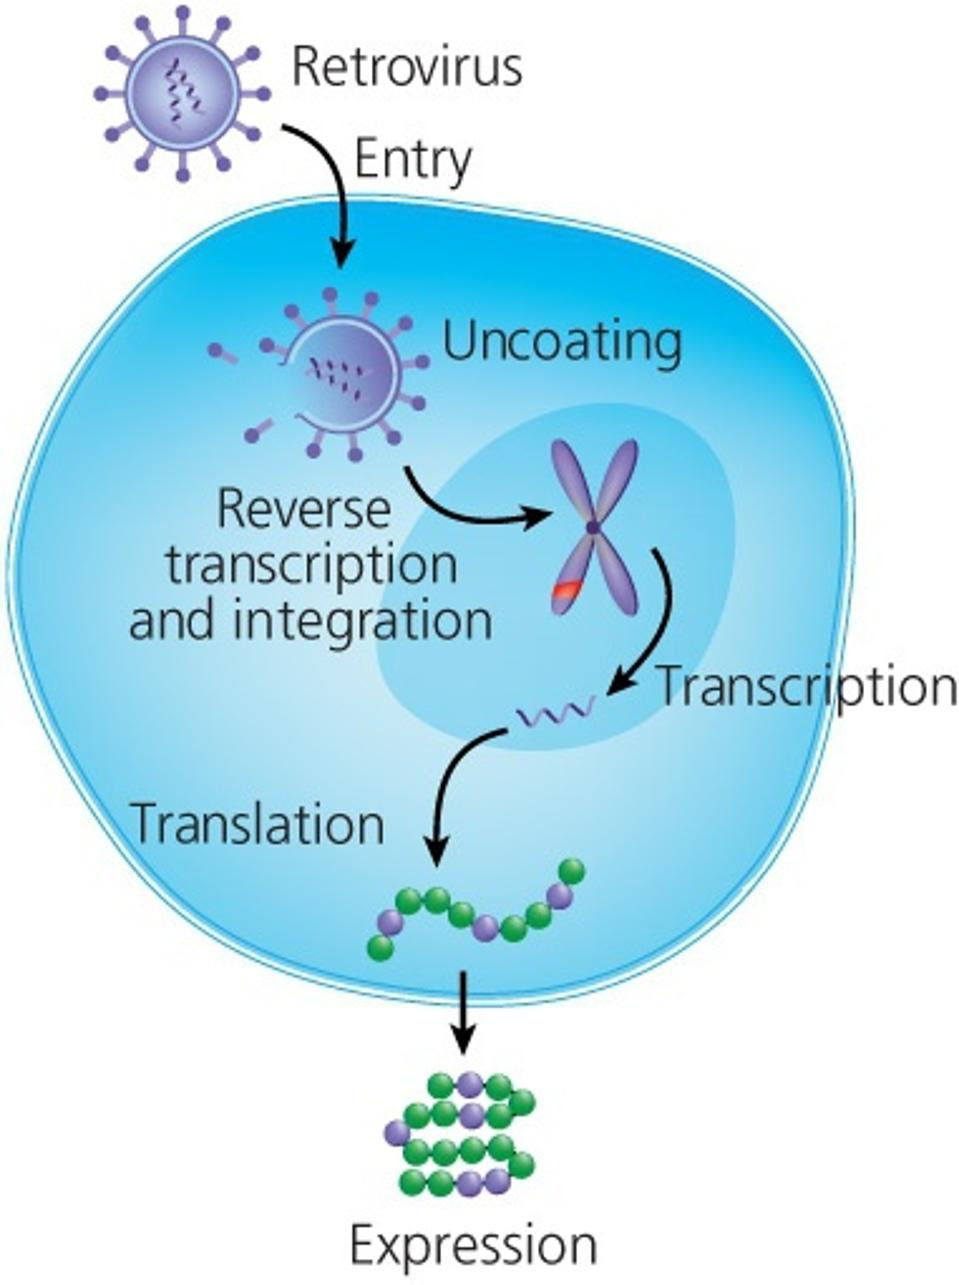 Retrovirus transduction